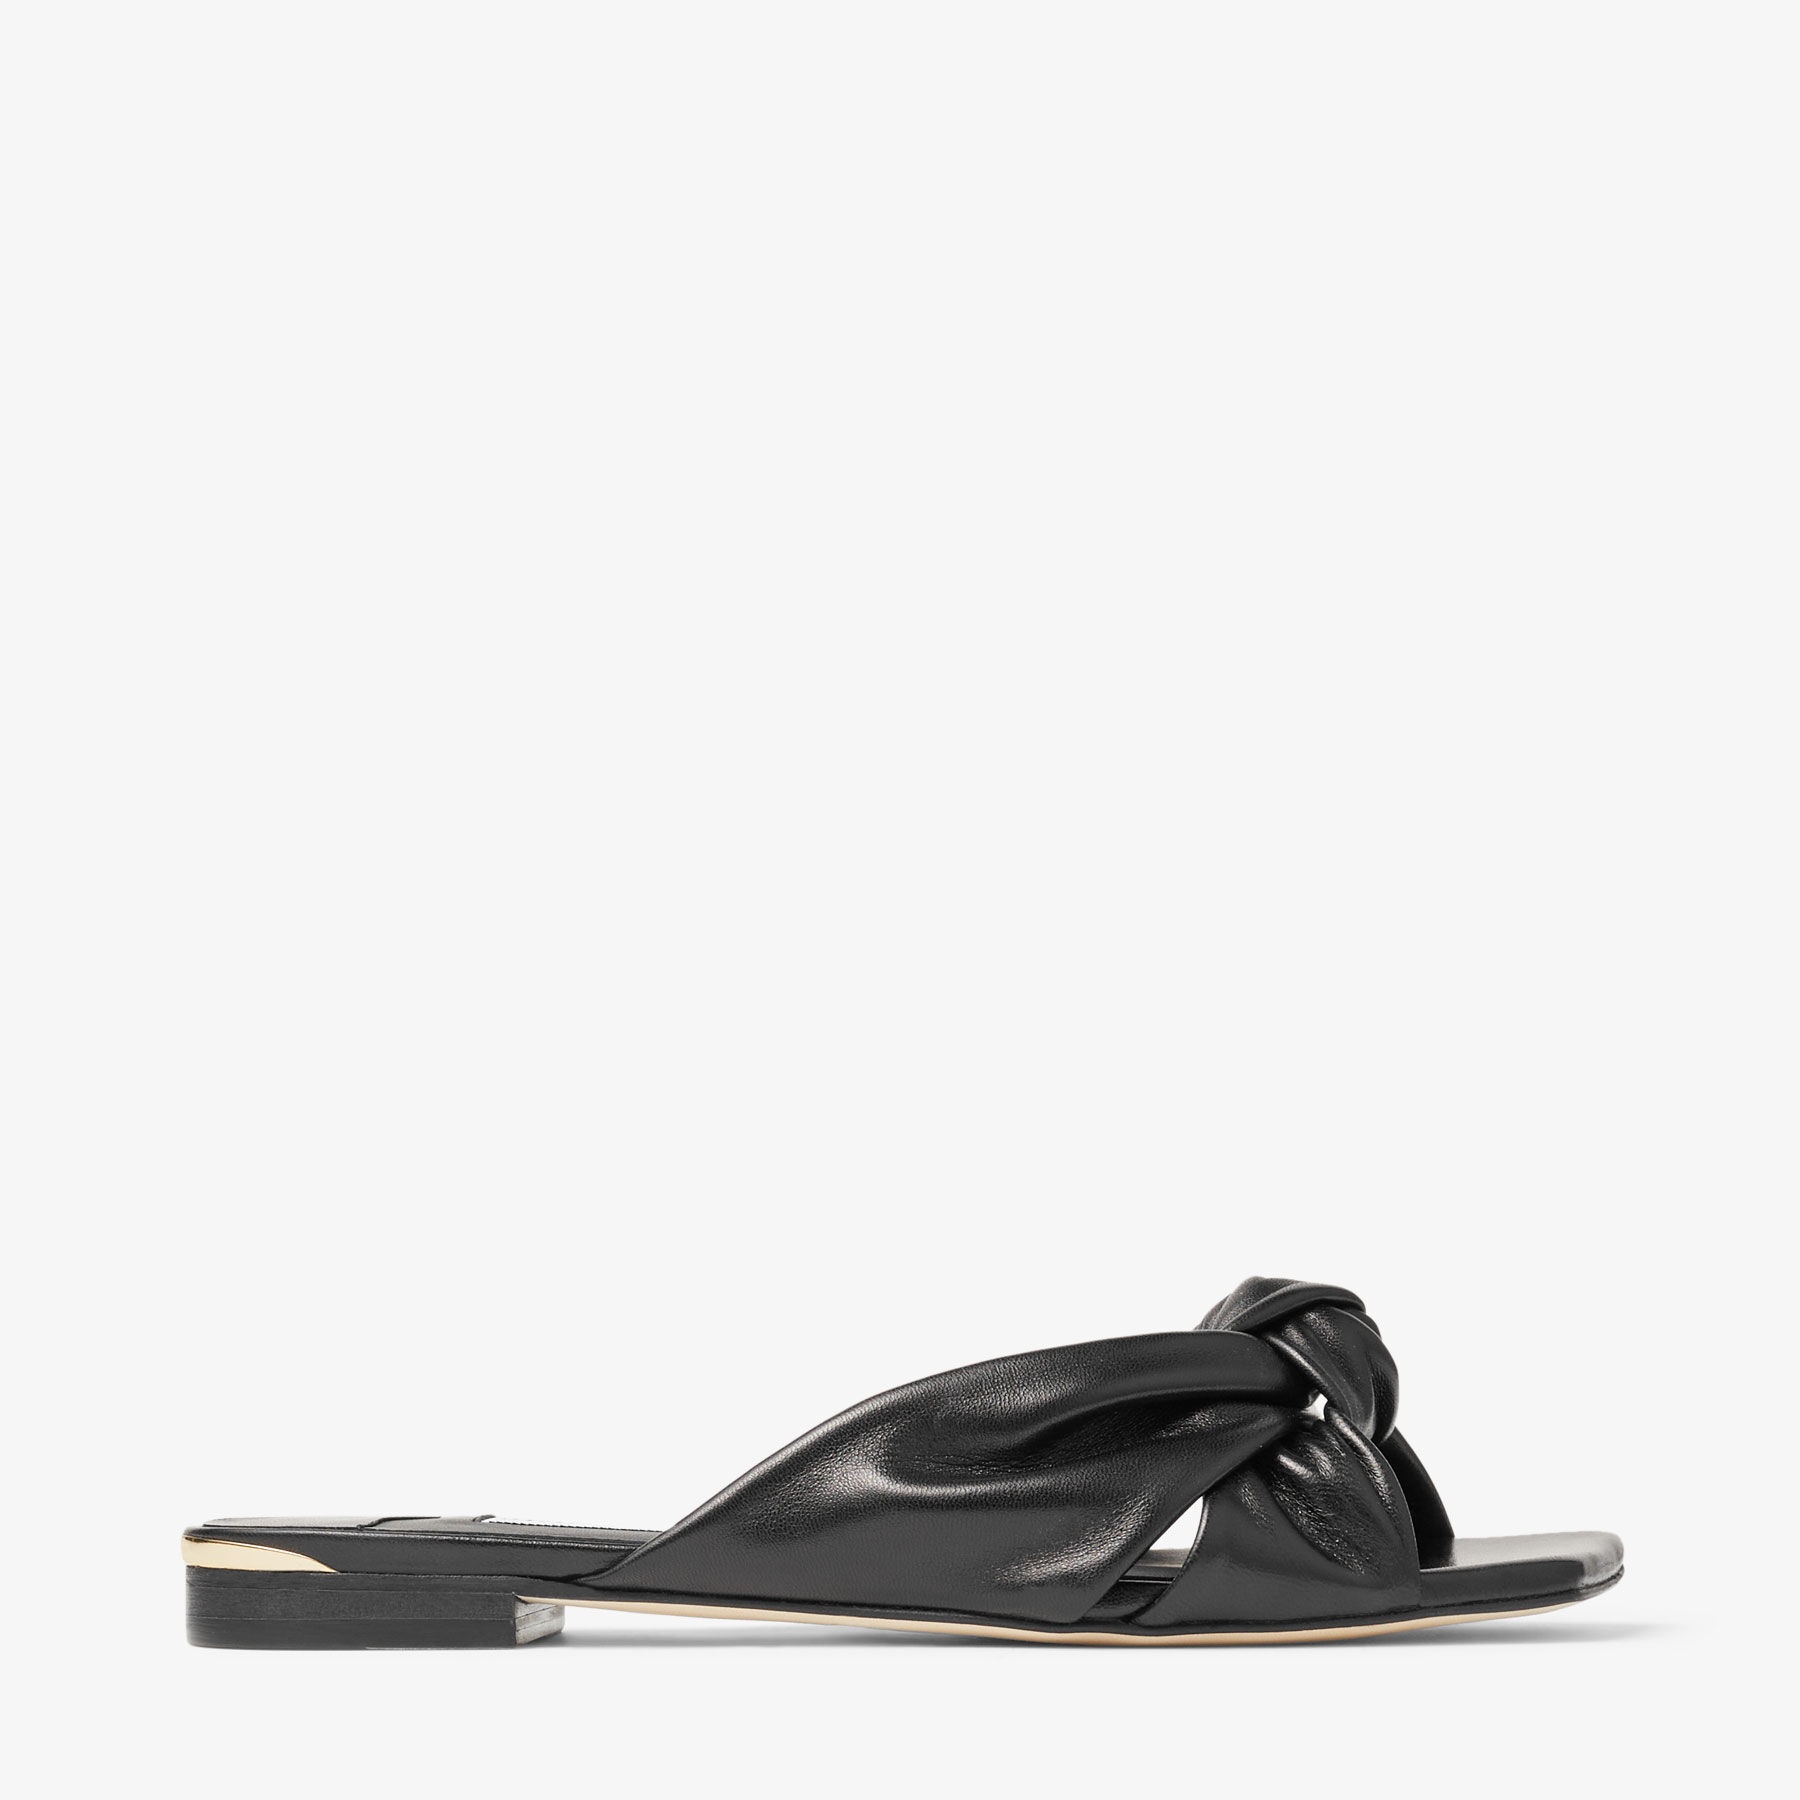 Avenue Flat
Black Nappa Leather Flat Sandals - 1